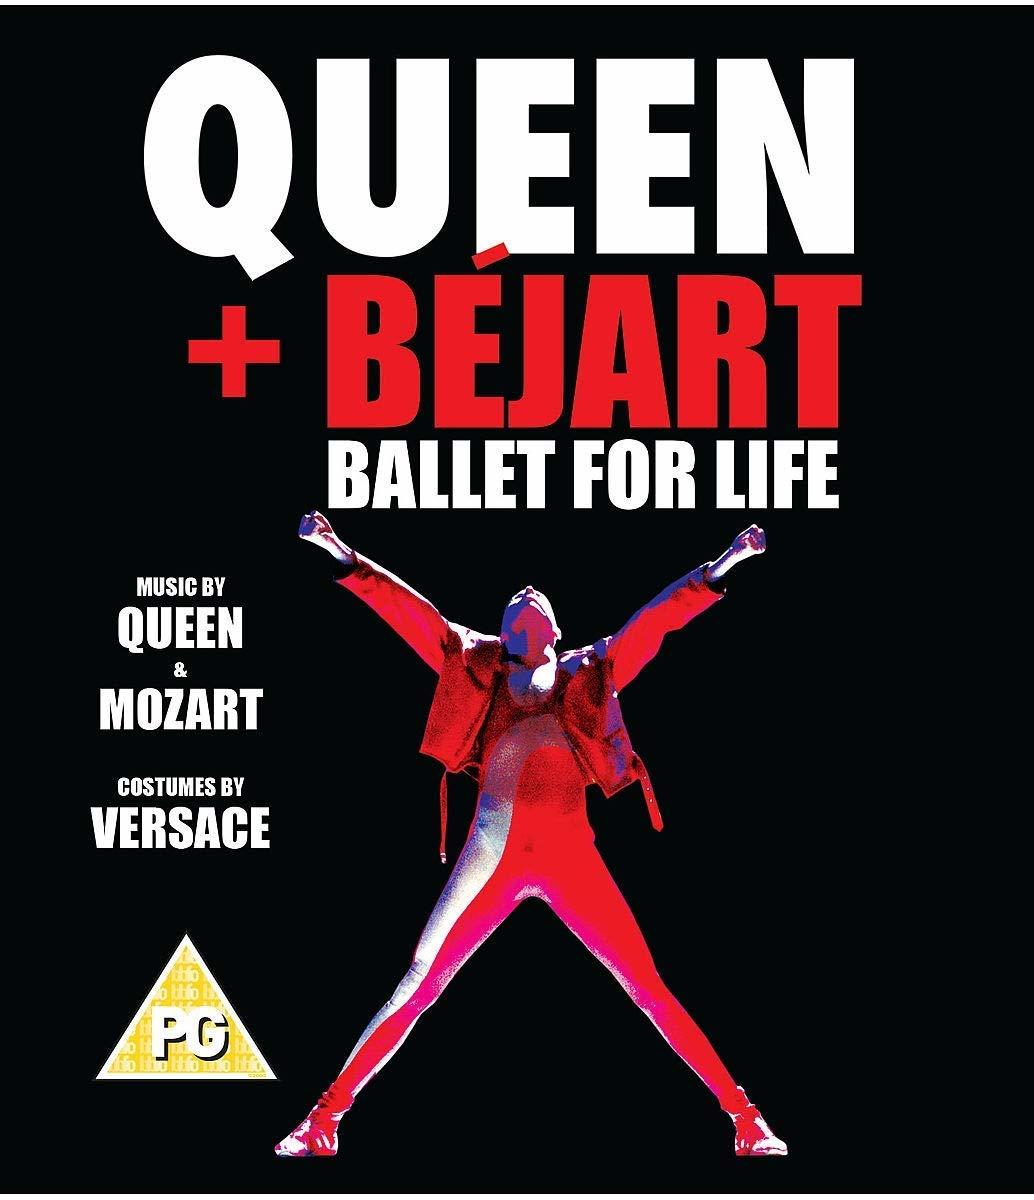 Ballet Maurice Queen, Life - - Bejart (DVD) For